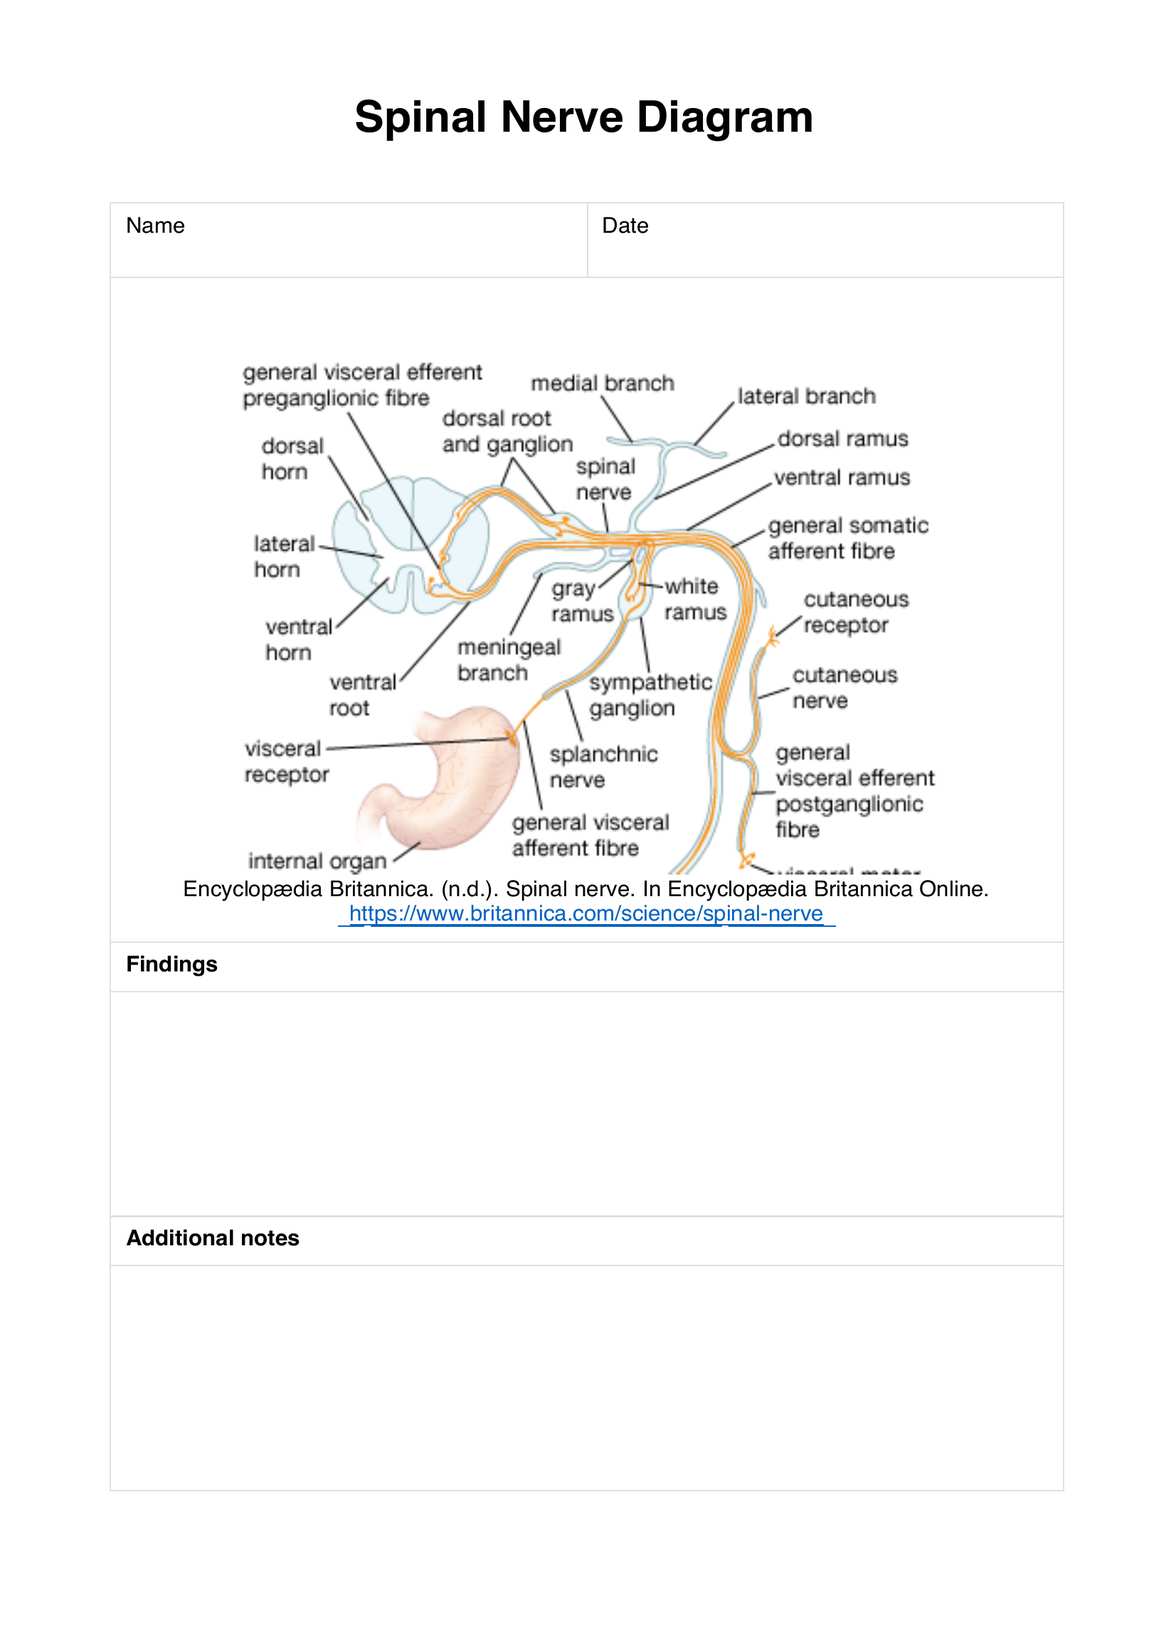 Spinal Nerve Diagram PDF Example